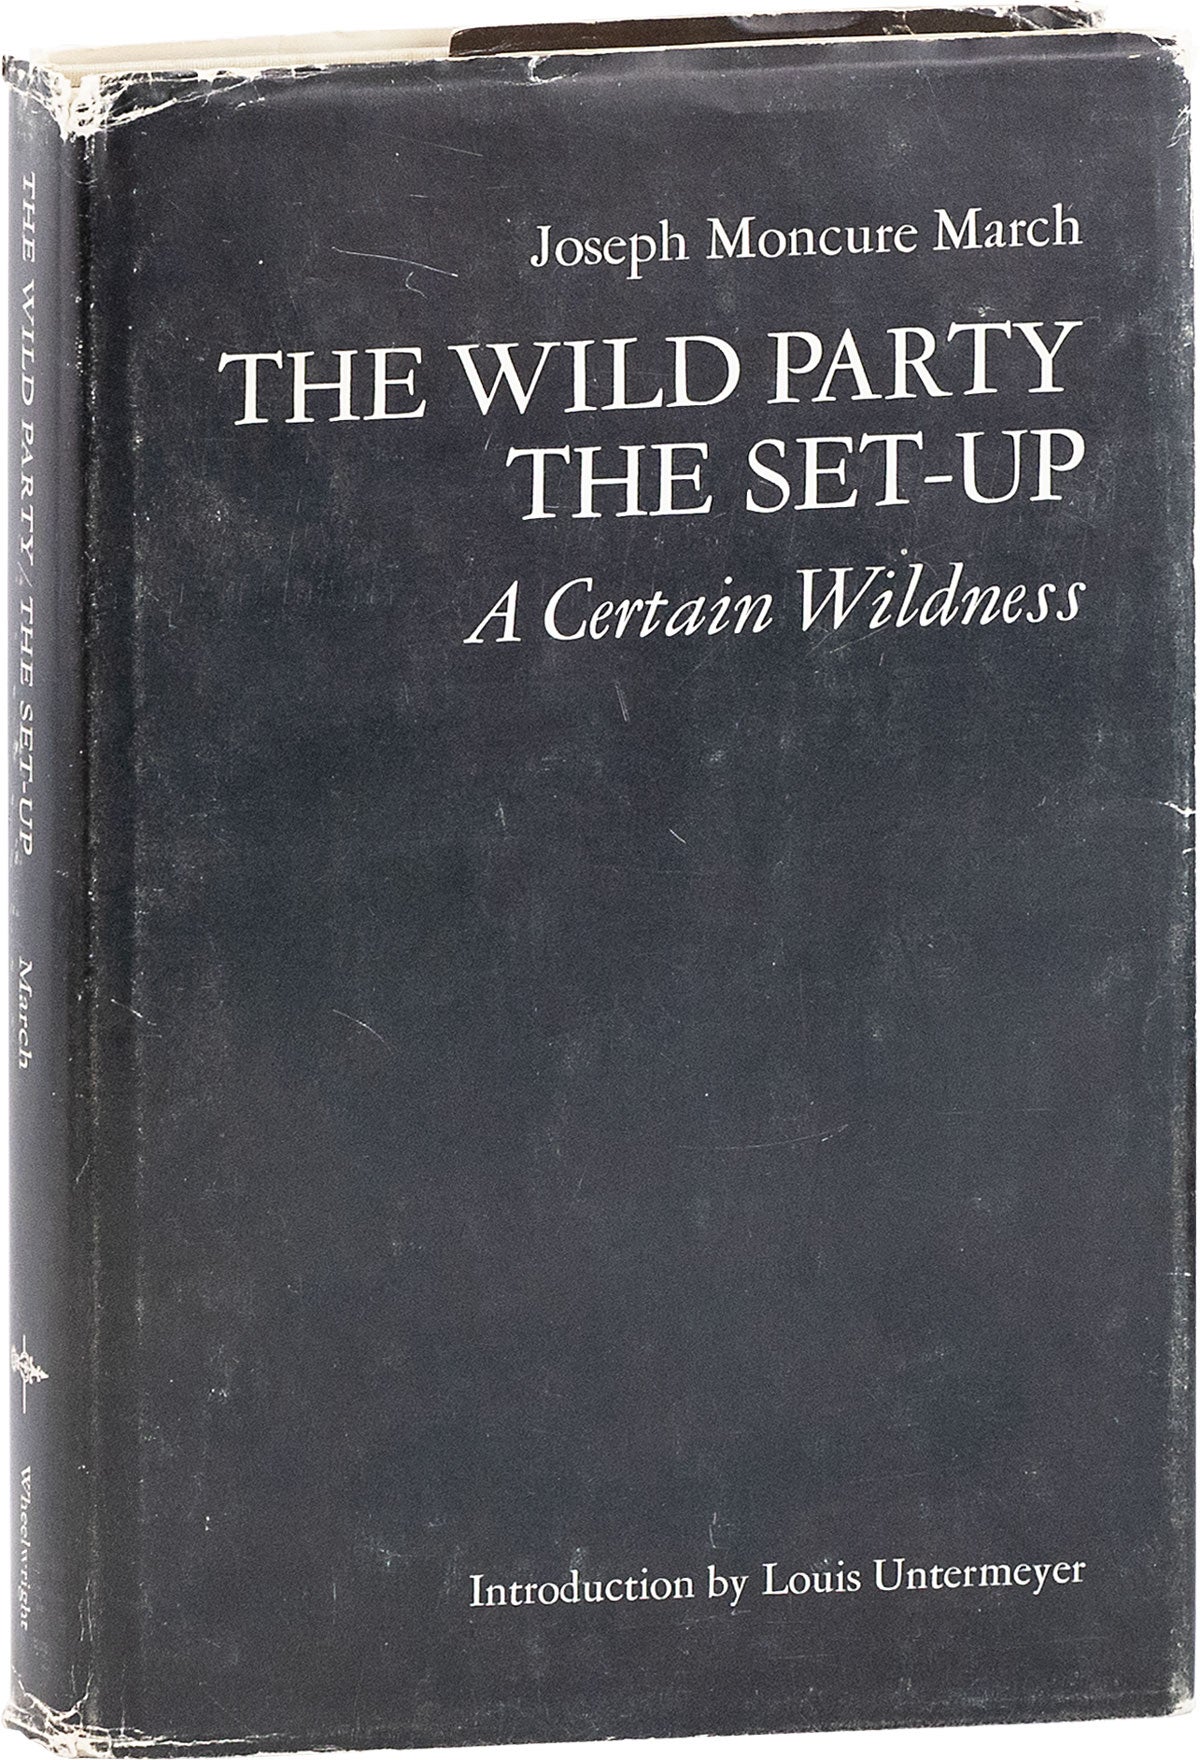 [Item #80753] The Wild Party / The Set-Up / A Certain Wildness. Joseph Moncure MARCH, introd Louis Untermeyer.